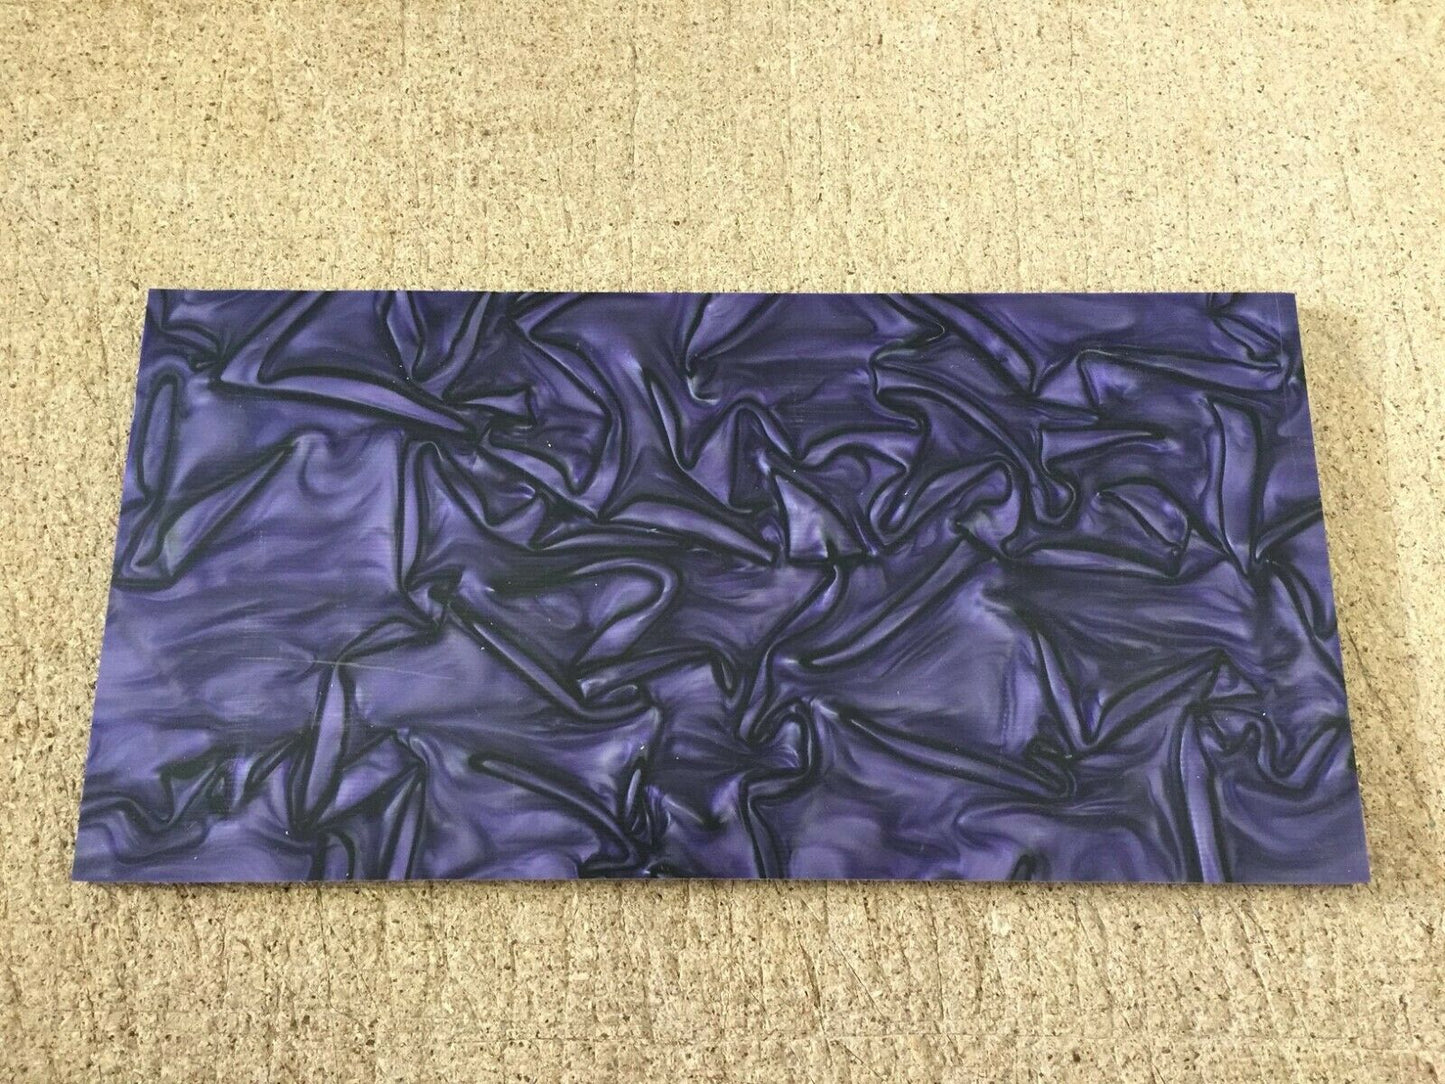 Kirinite Purple Haze 1/4" x 6" x 12" Sheet - UK Pen Blanks